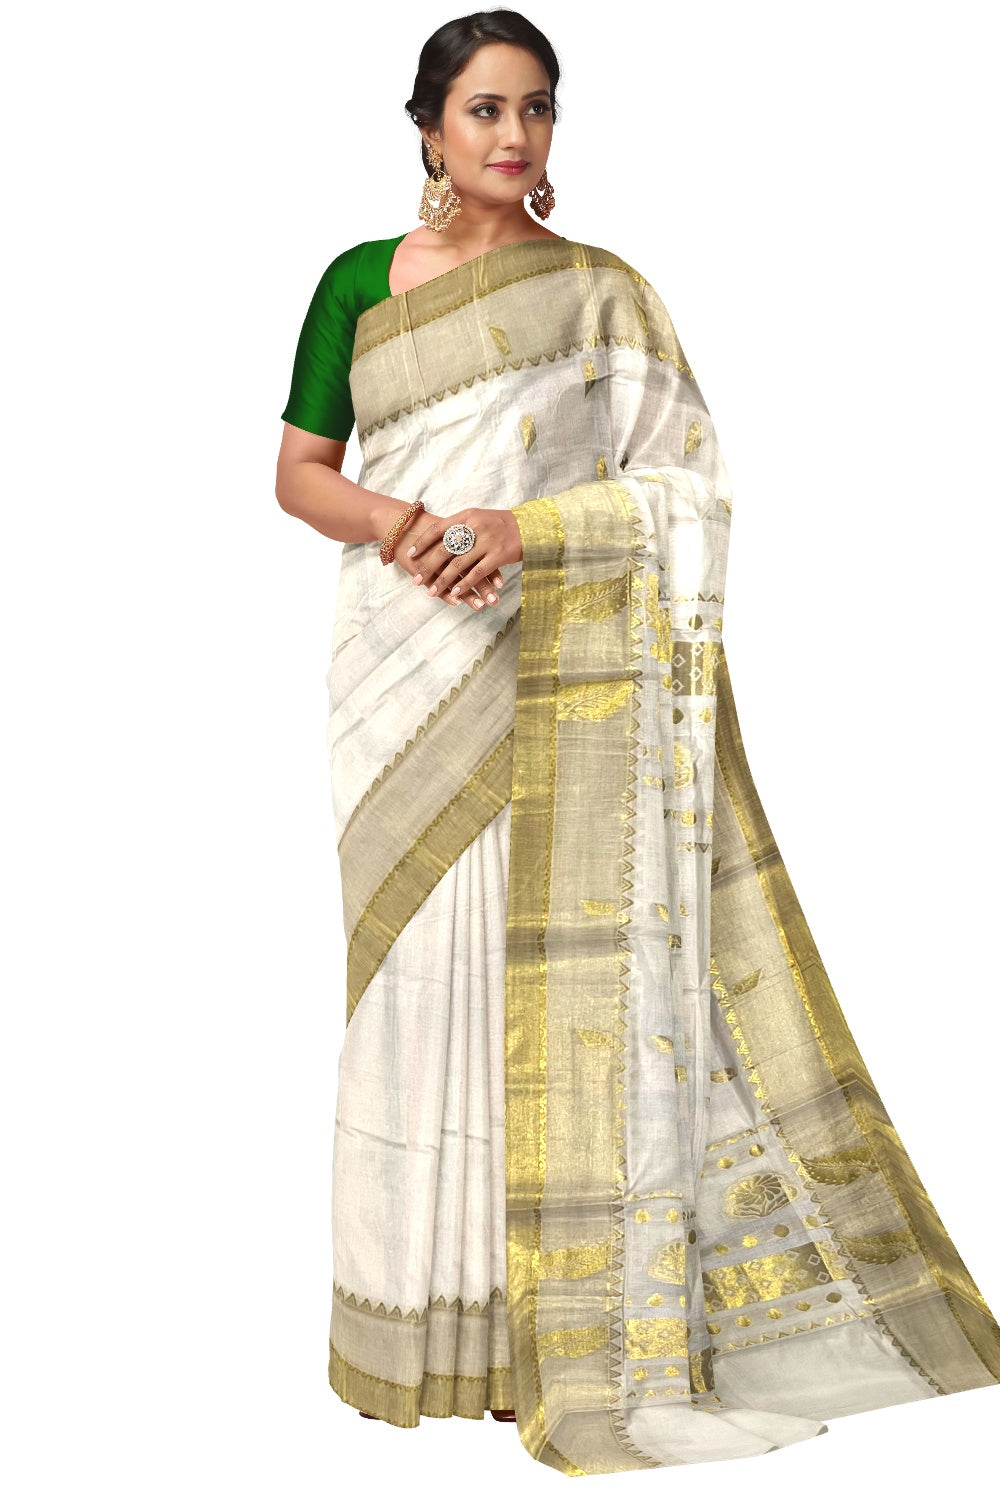 Southloom Kerala Saree with Kasavu Woven Works on Body